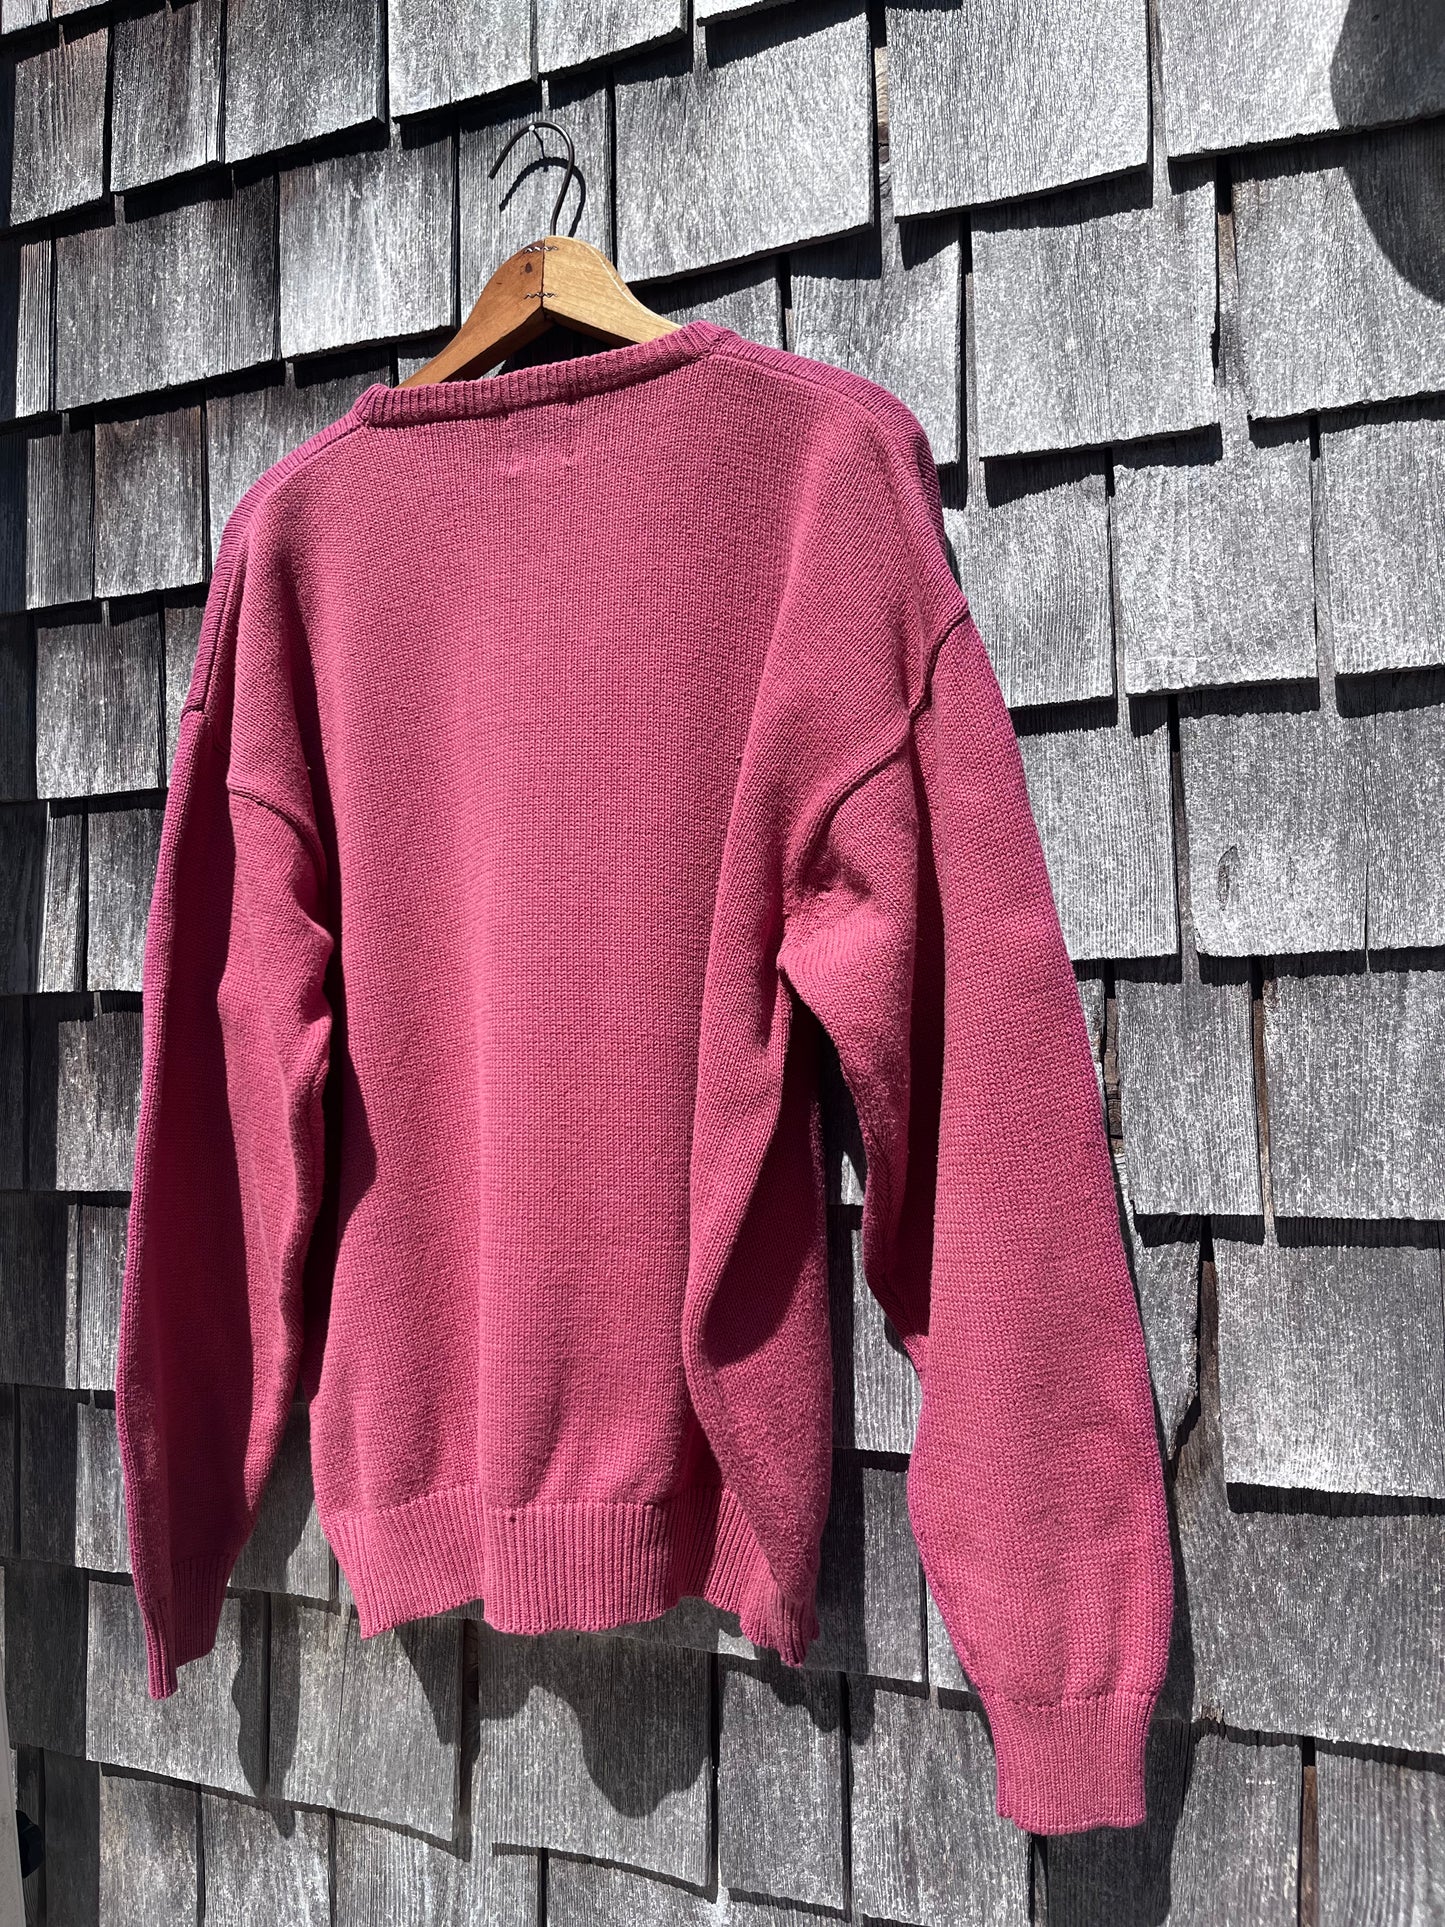 90s Gap Crewneck Knit Cotton Sweater Medium/Large